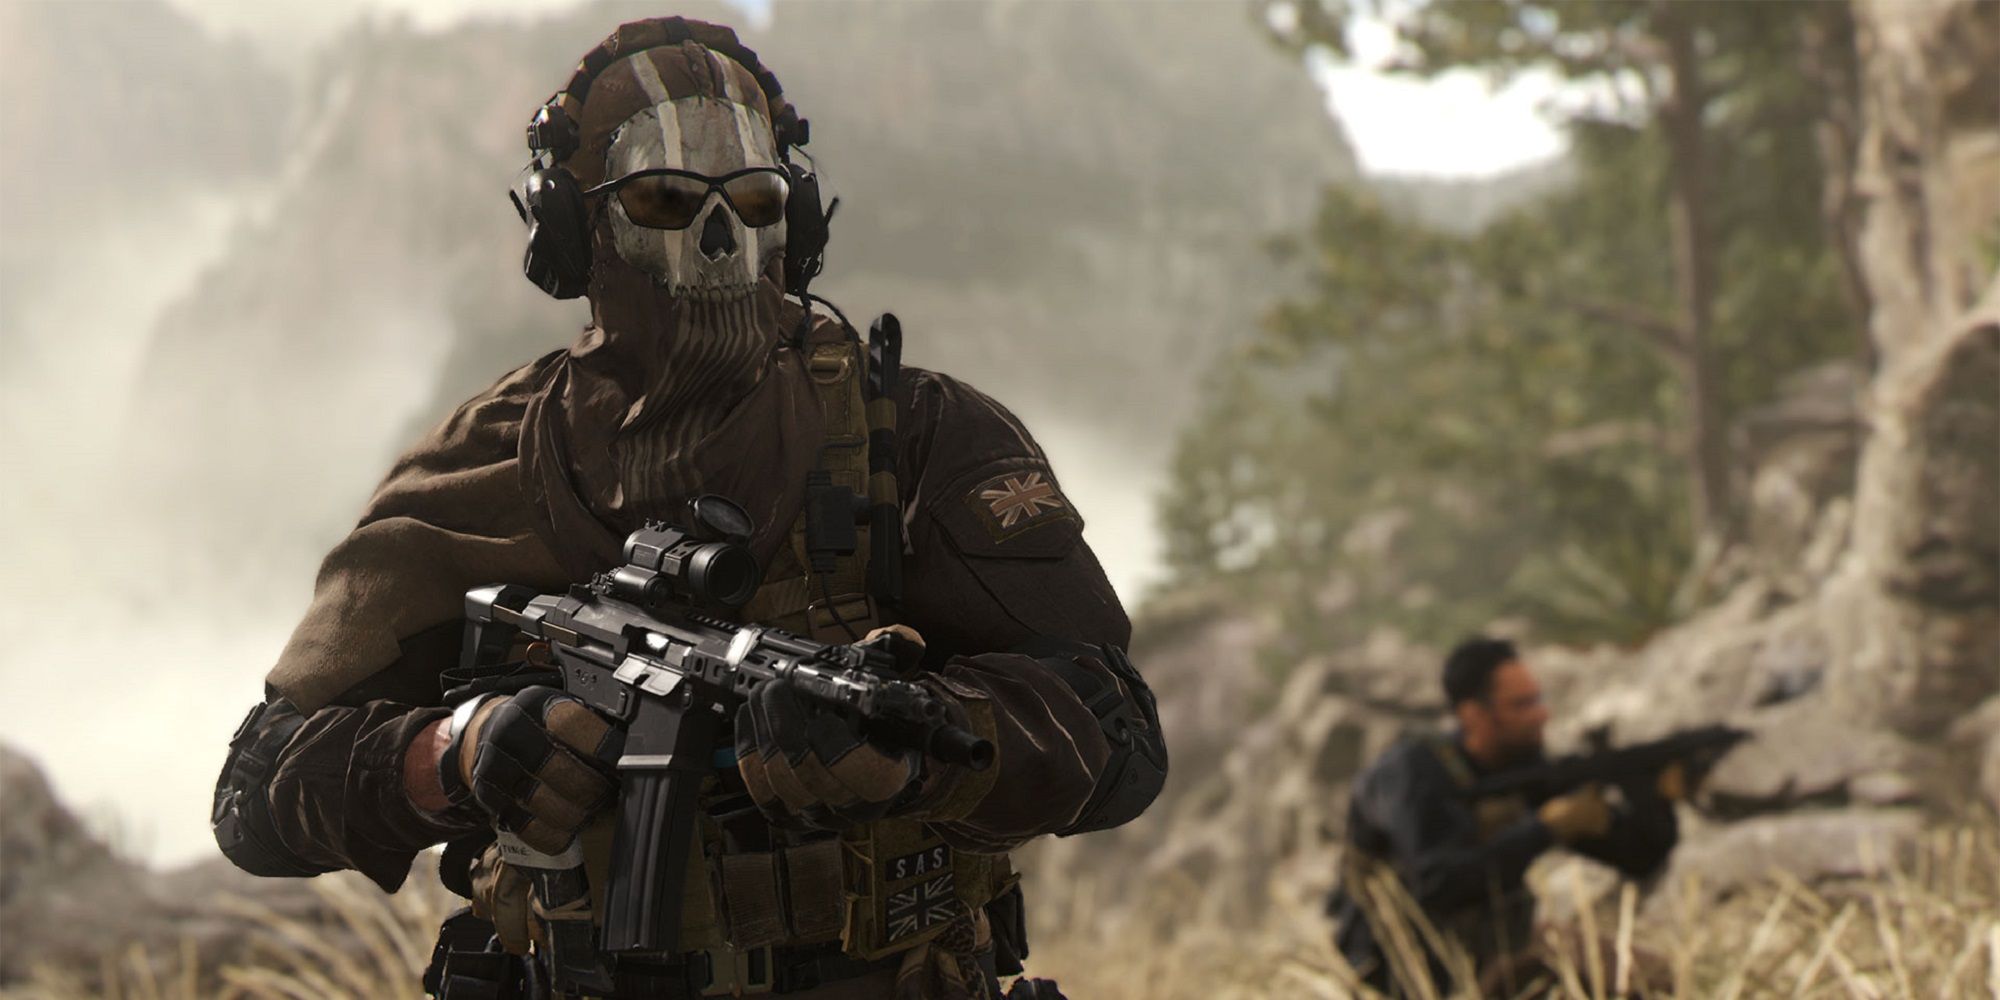 Ghost from Modern Warfare 2 holding a gun in hand